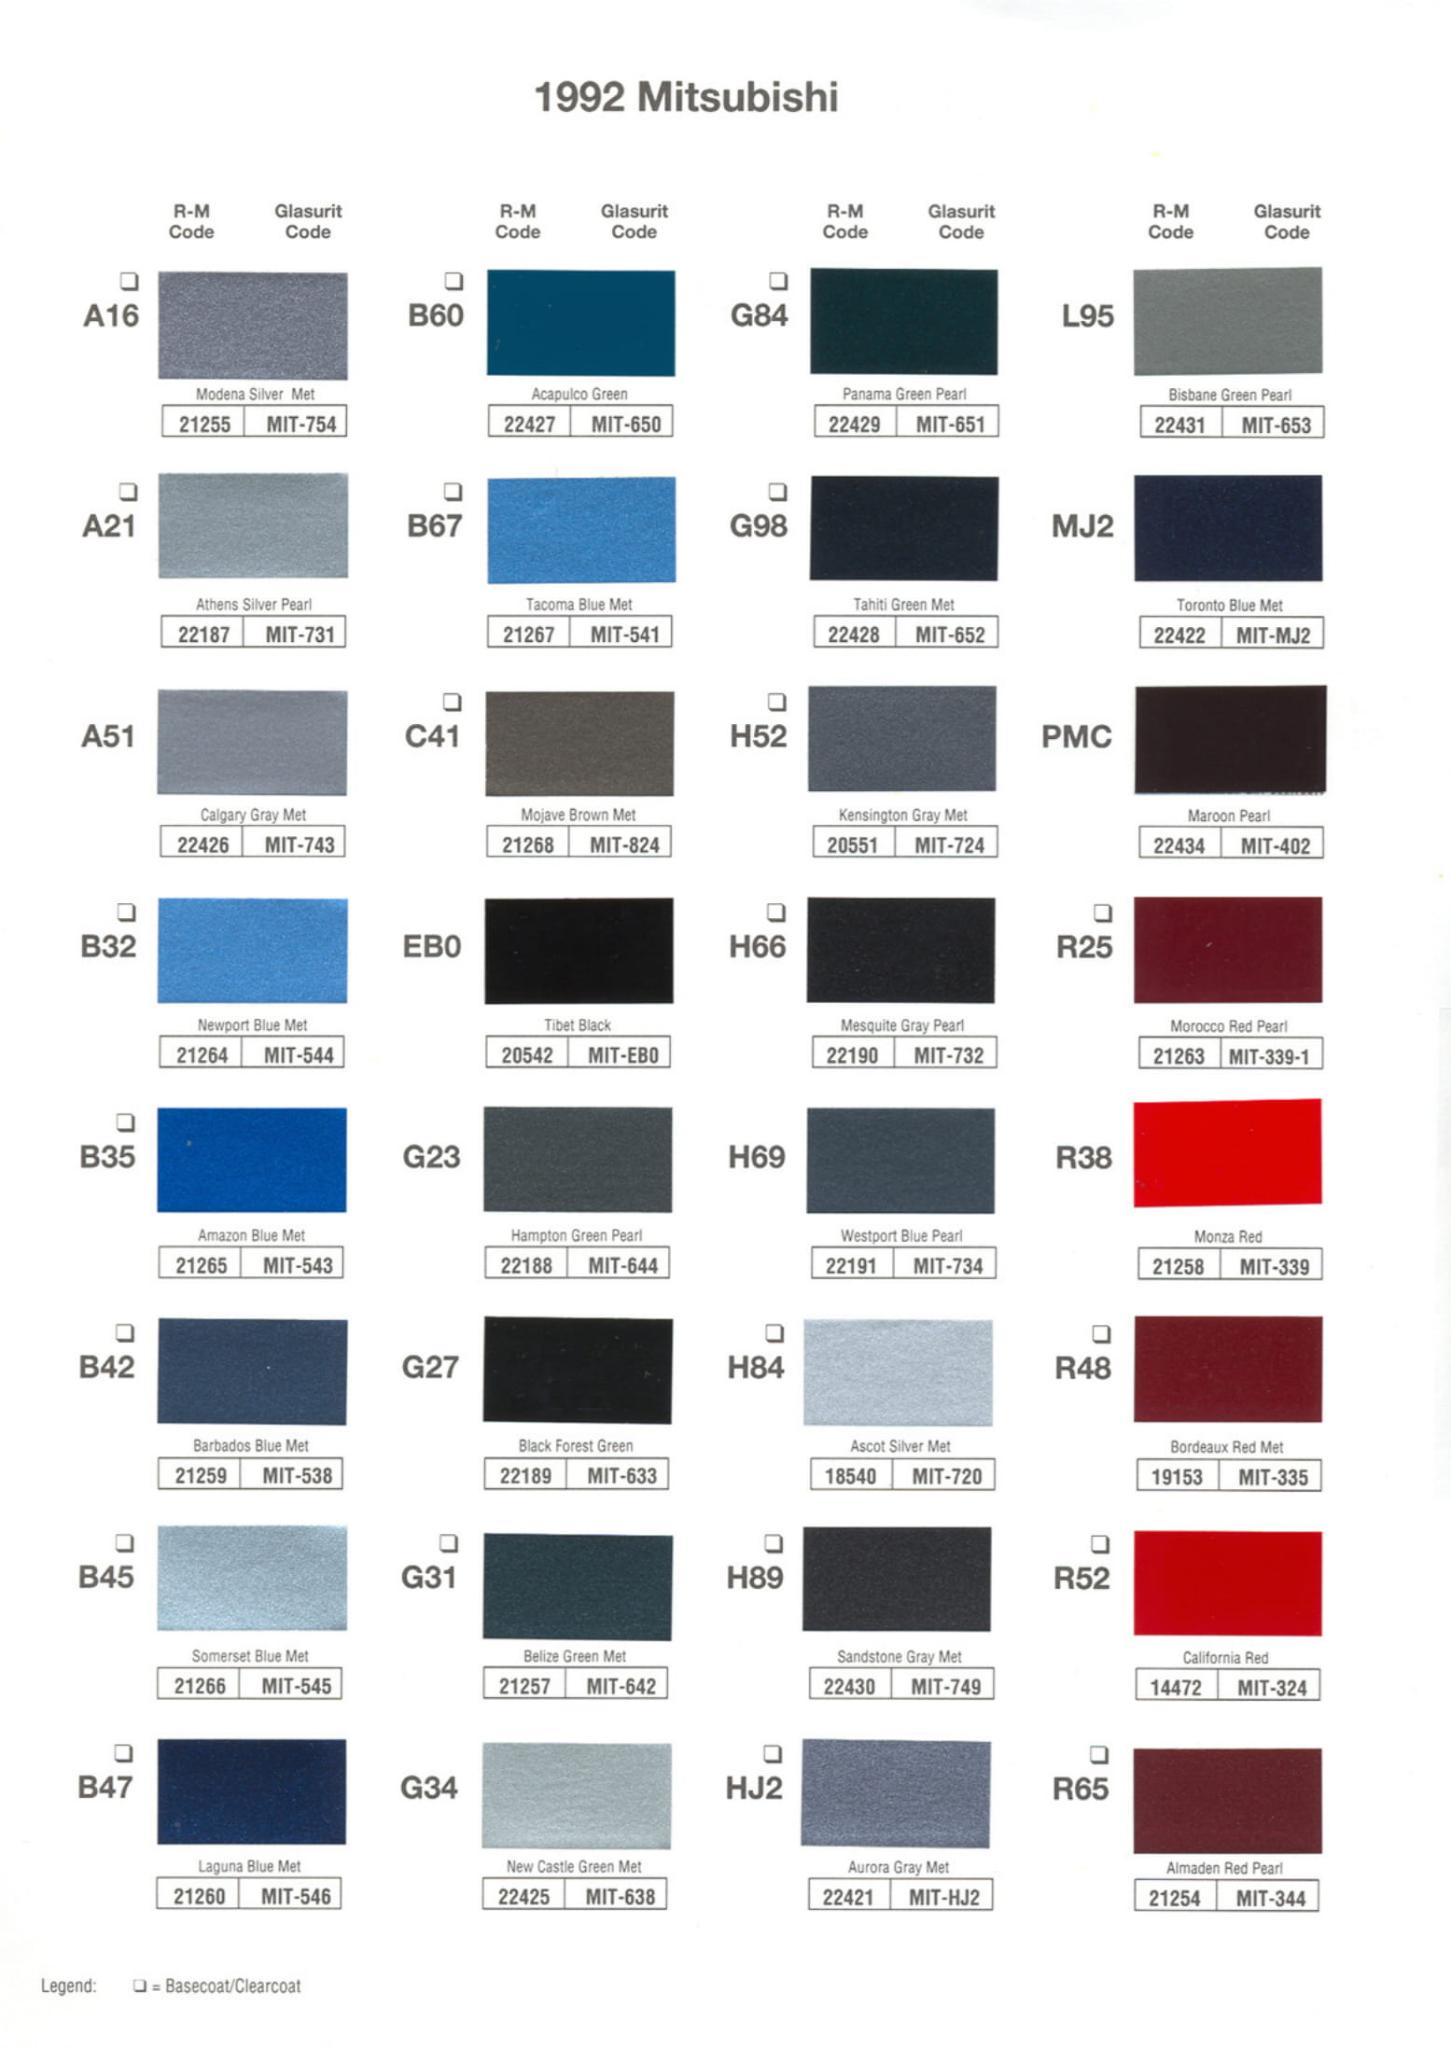 Mitsubishi Paint Code and Color Chart